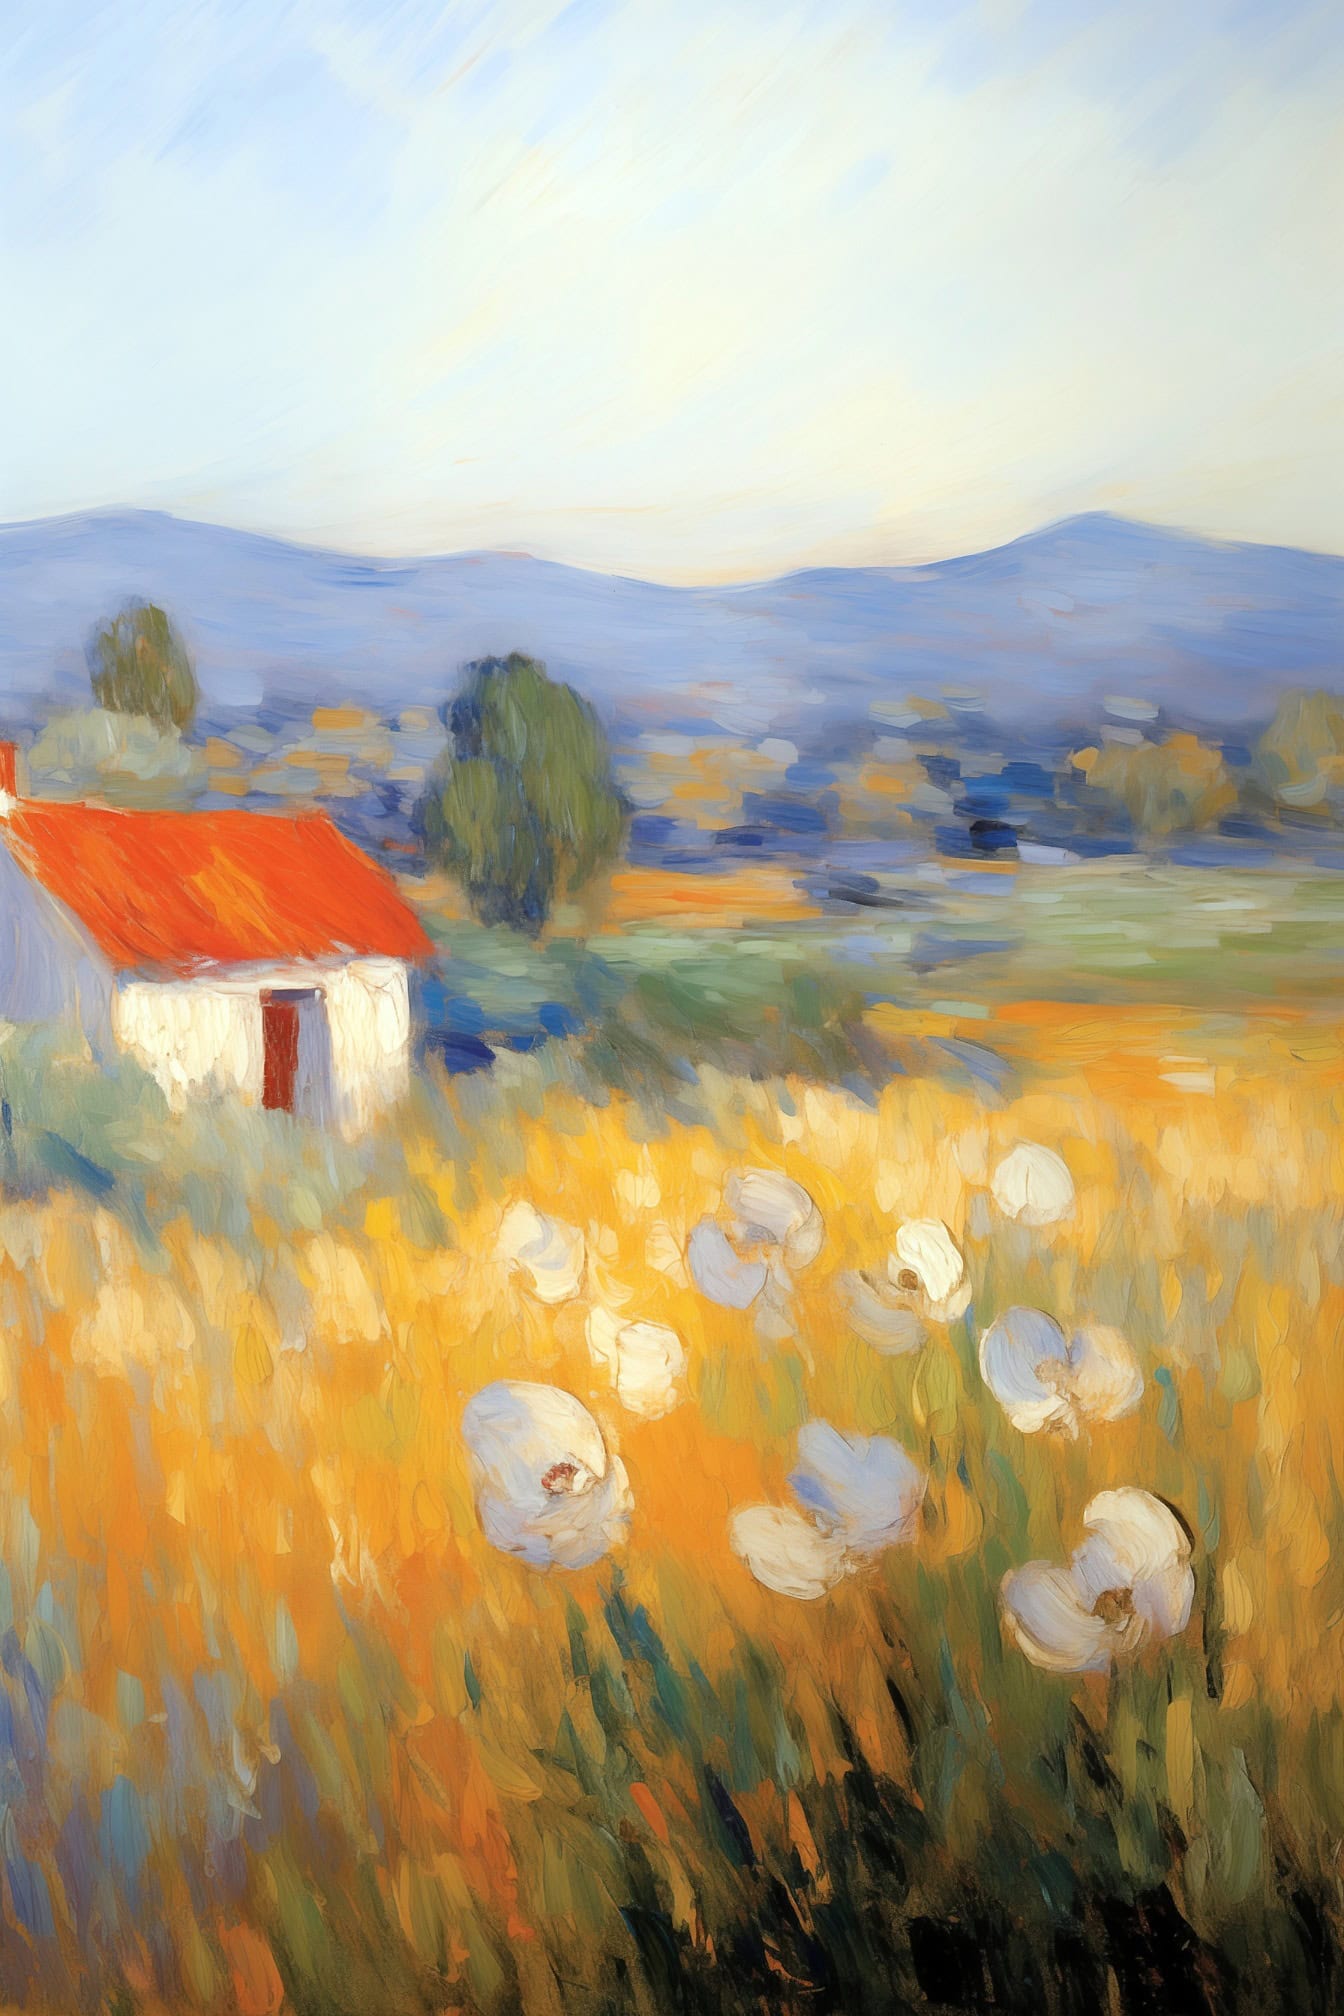 Lukisan akrilik impresionistik dari rumah pertanian pedesaan di ladang bunga